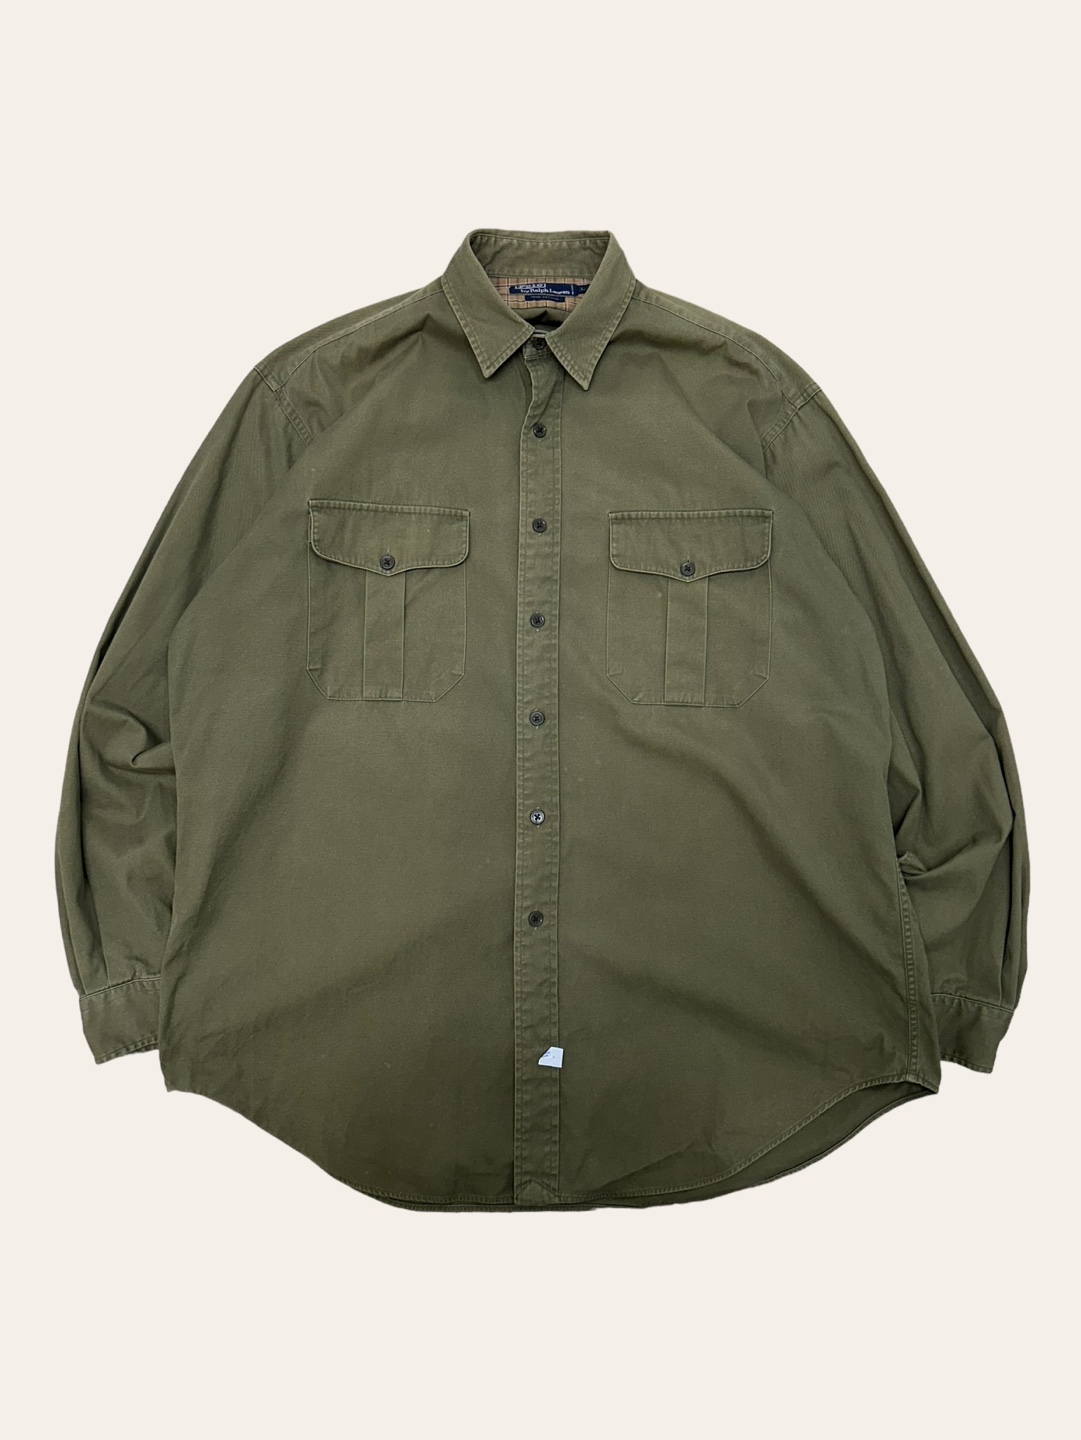 Polo ralph lauren khaki color military work shirt L